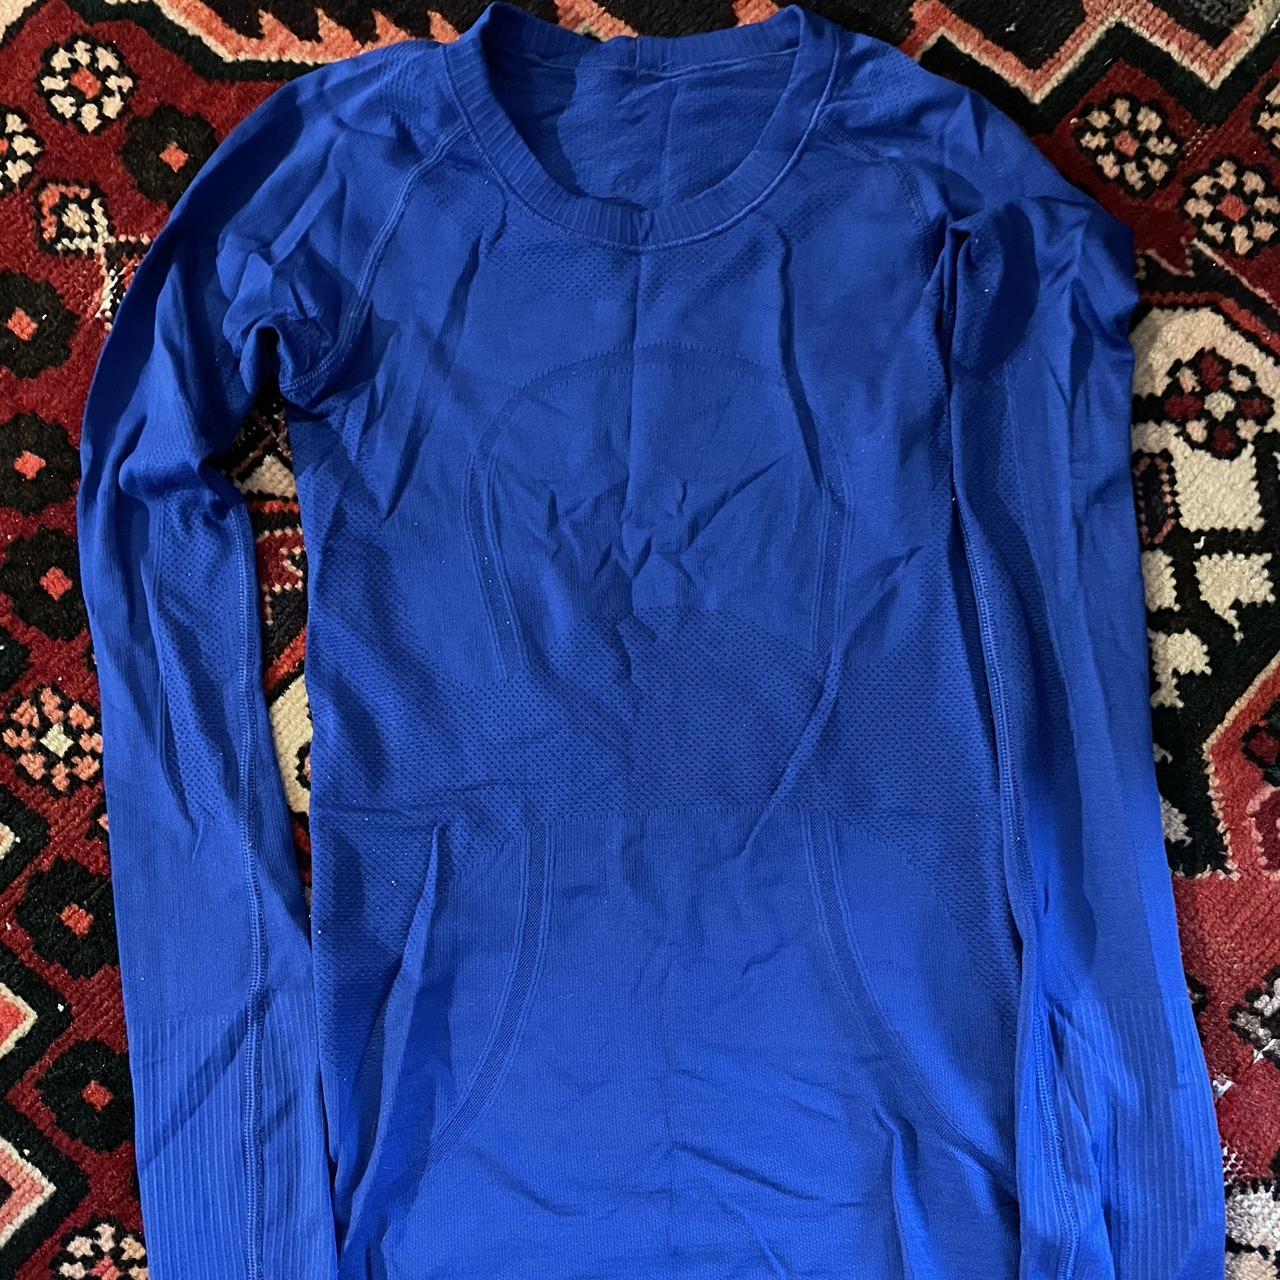 Lululemon Women's Blue Shirt